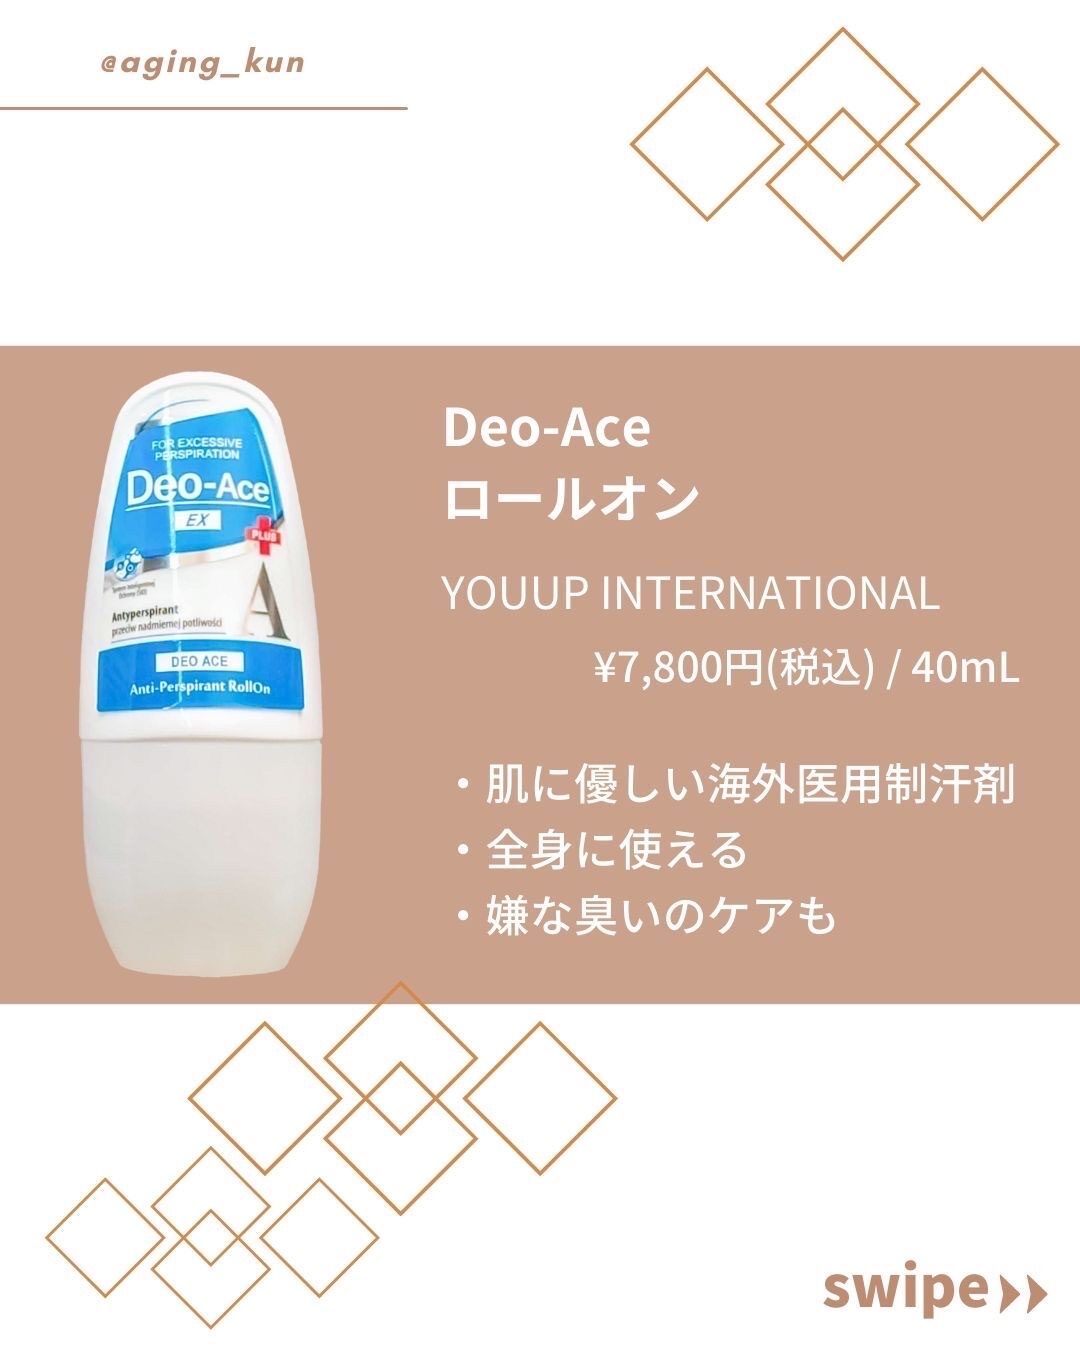 Deo-Ace / デオエースEXプラス ロールオンの口コミ写真（by aging_kun